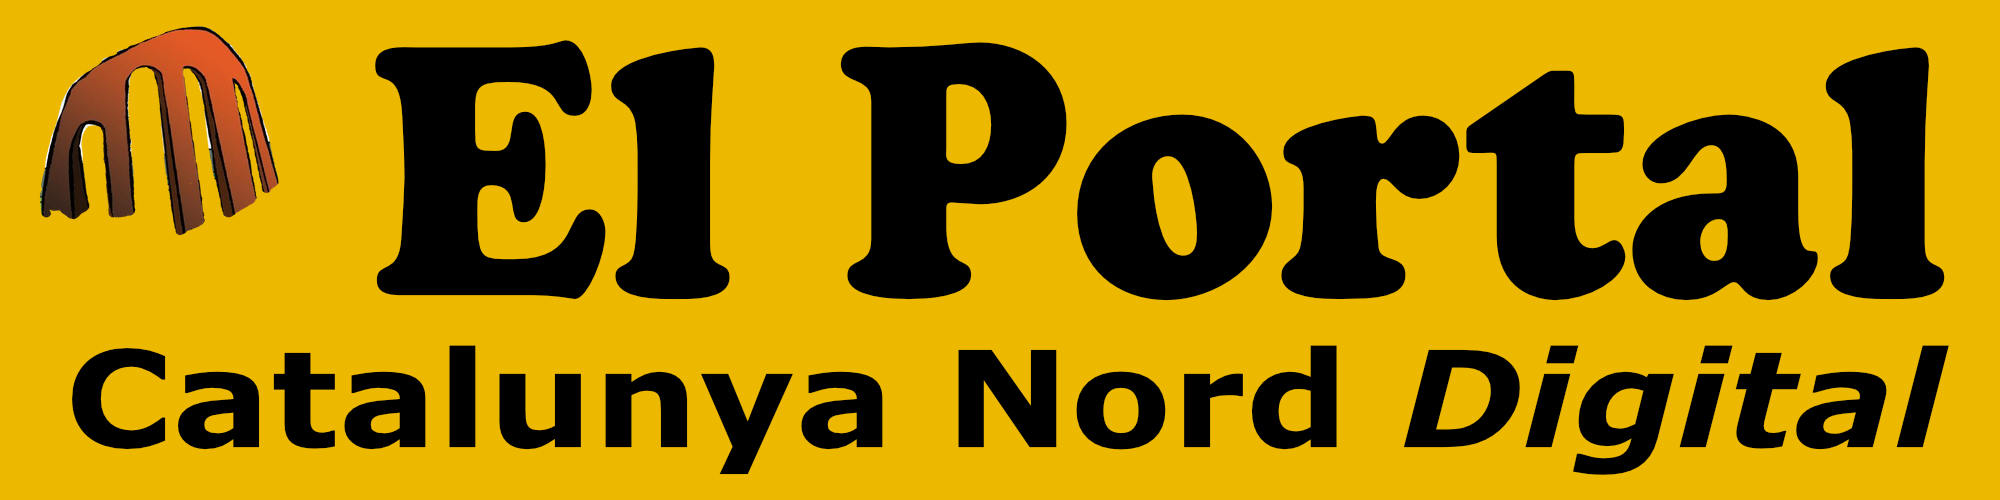 logo portal porta groc